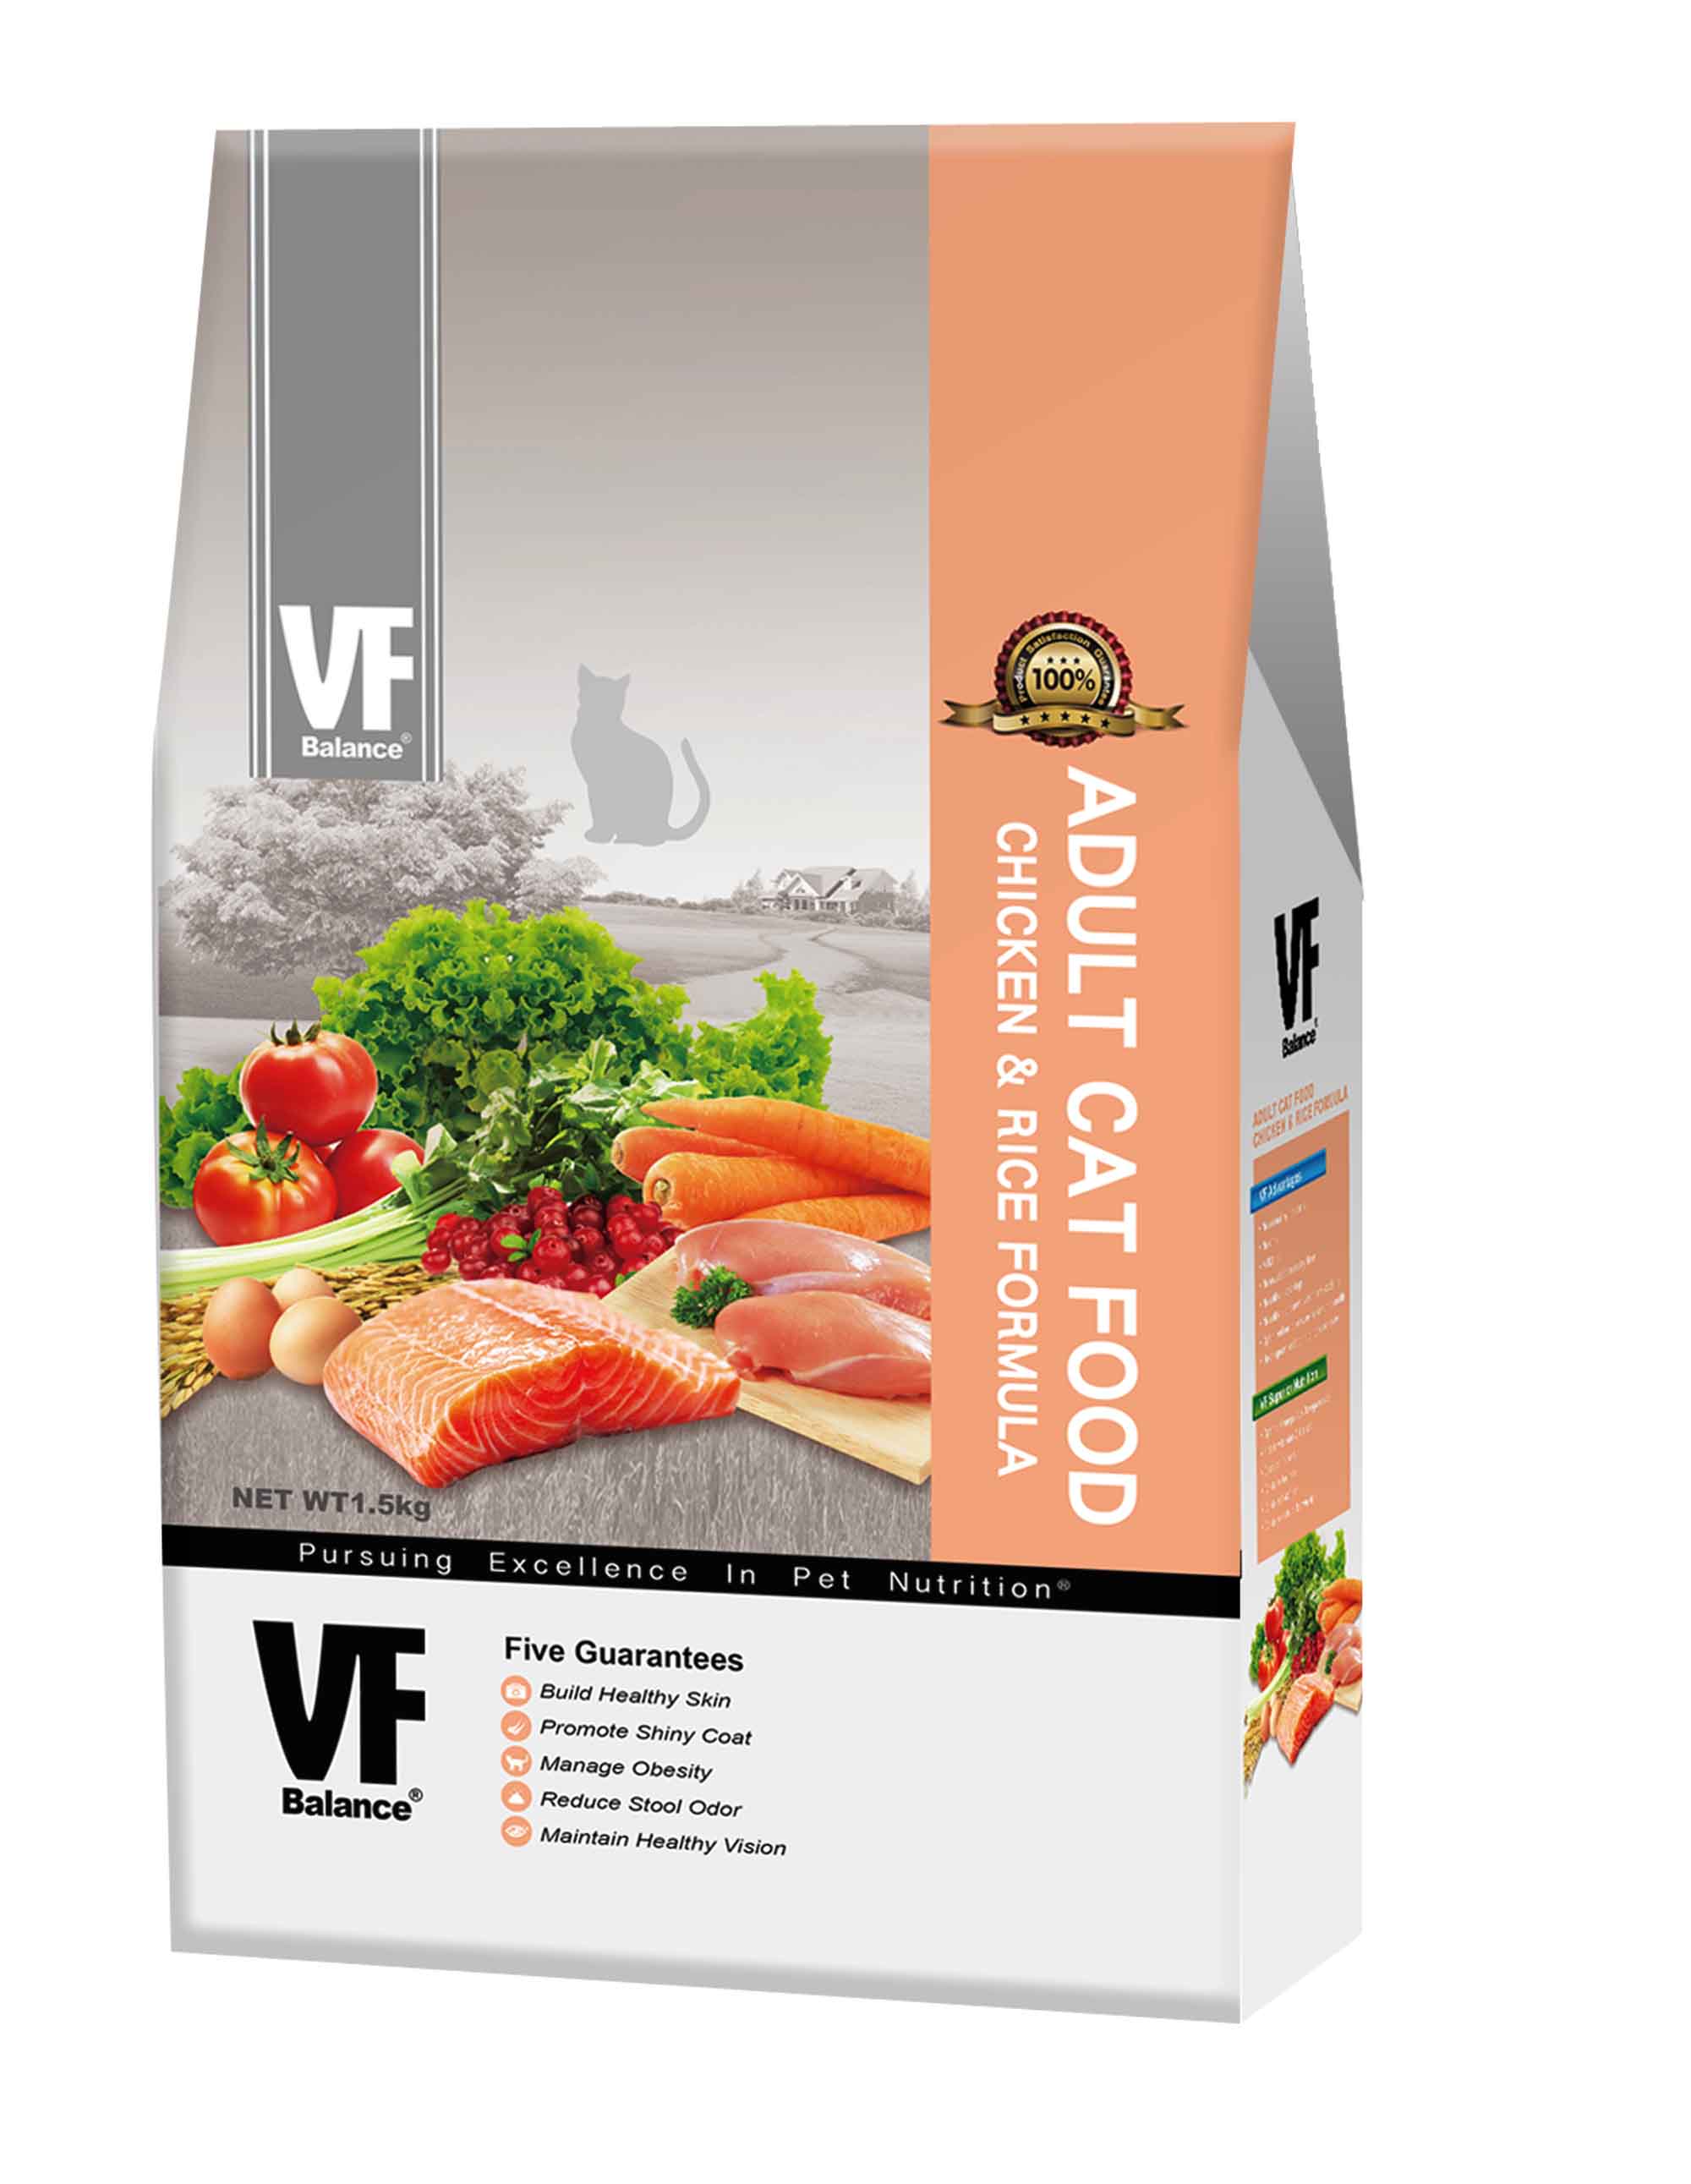 魏大夫特選成貓配方(雞肉+米)
VF Adult Cat Food Chicken & Rice Formula